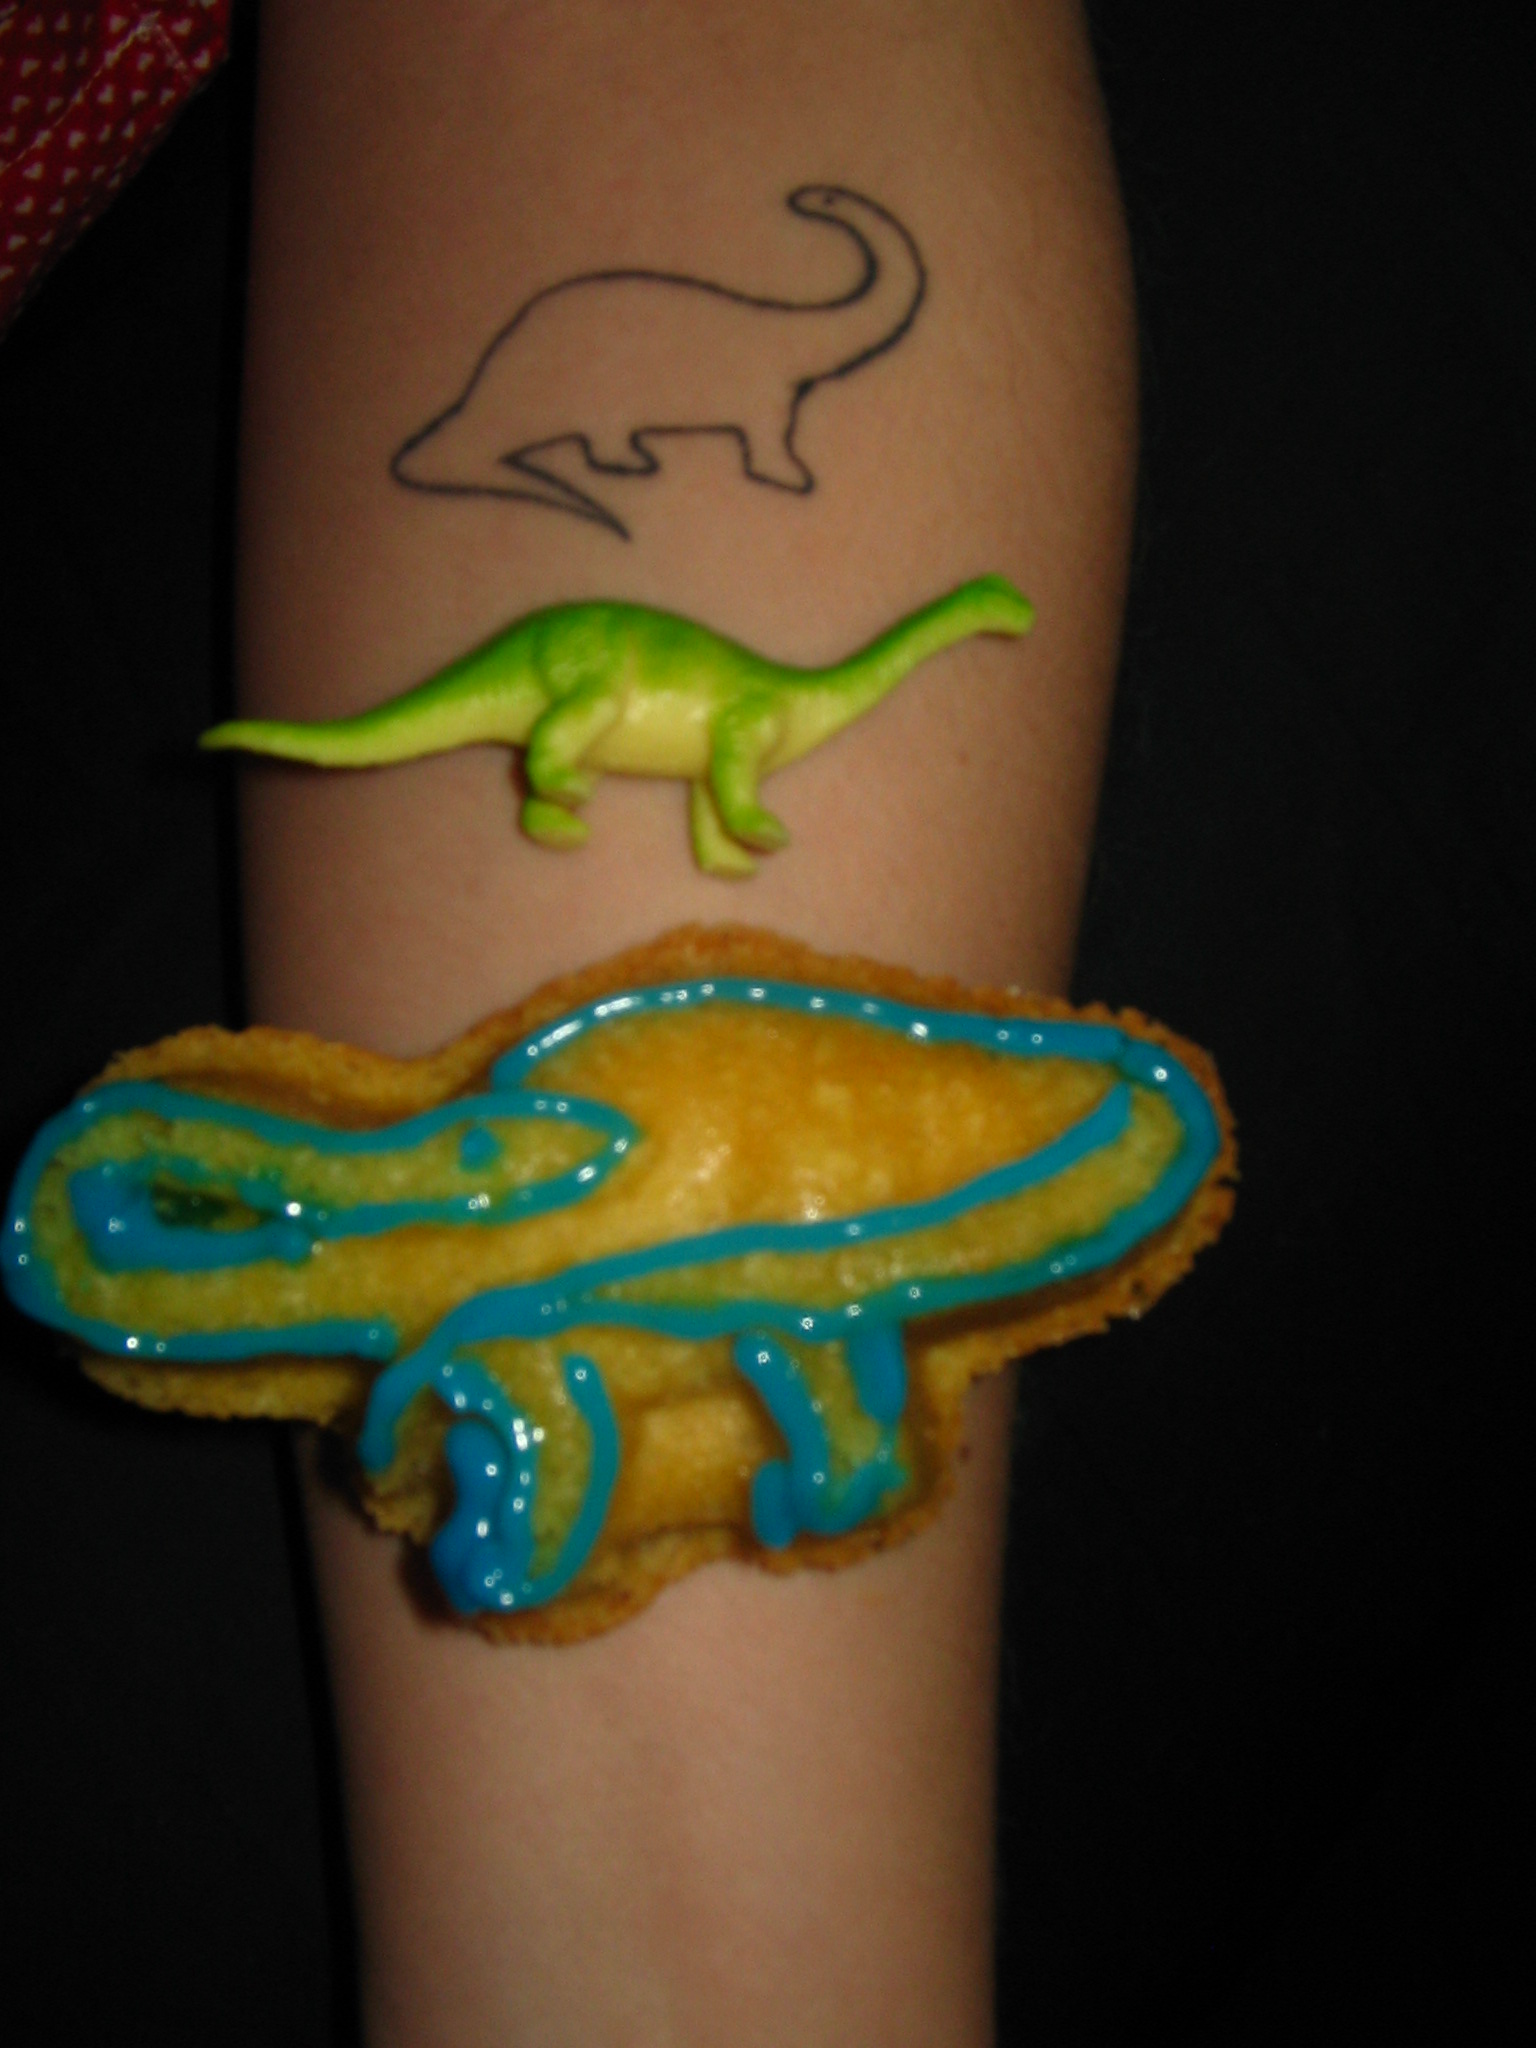 From top to bottom: Stella the Brontosaurus tattoo, a mini Brontosaurus figurine, and a Brontosaurus Vanilla Cupcake.